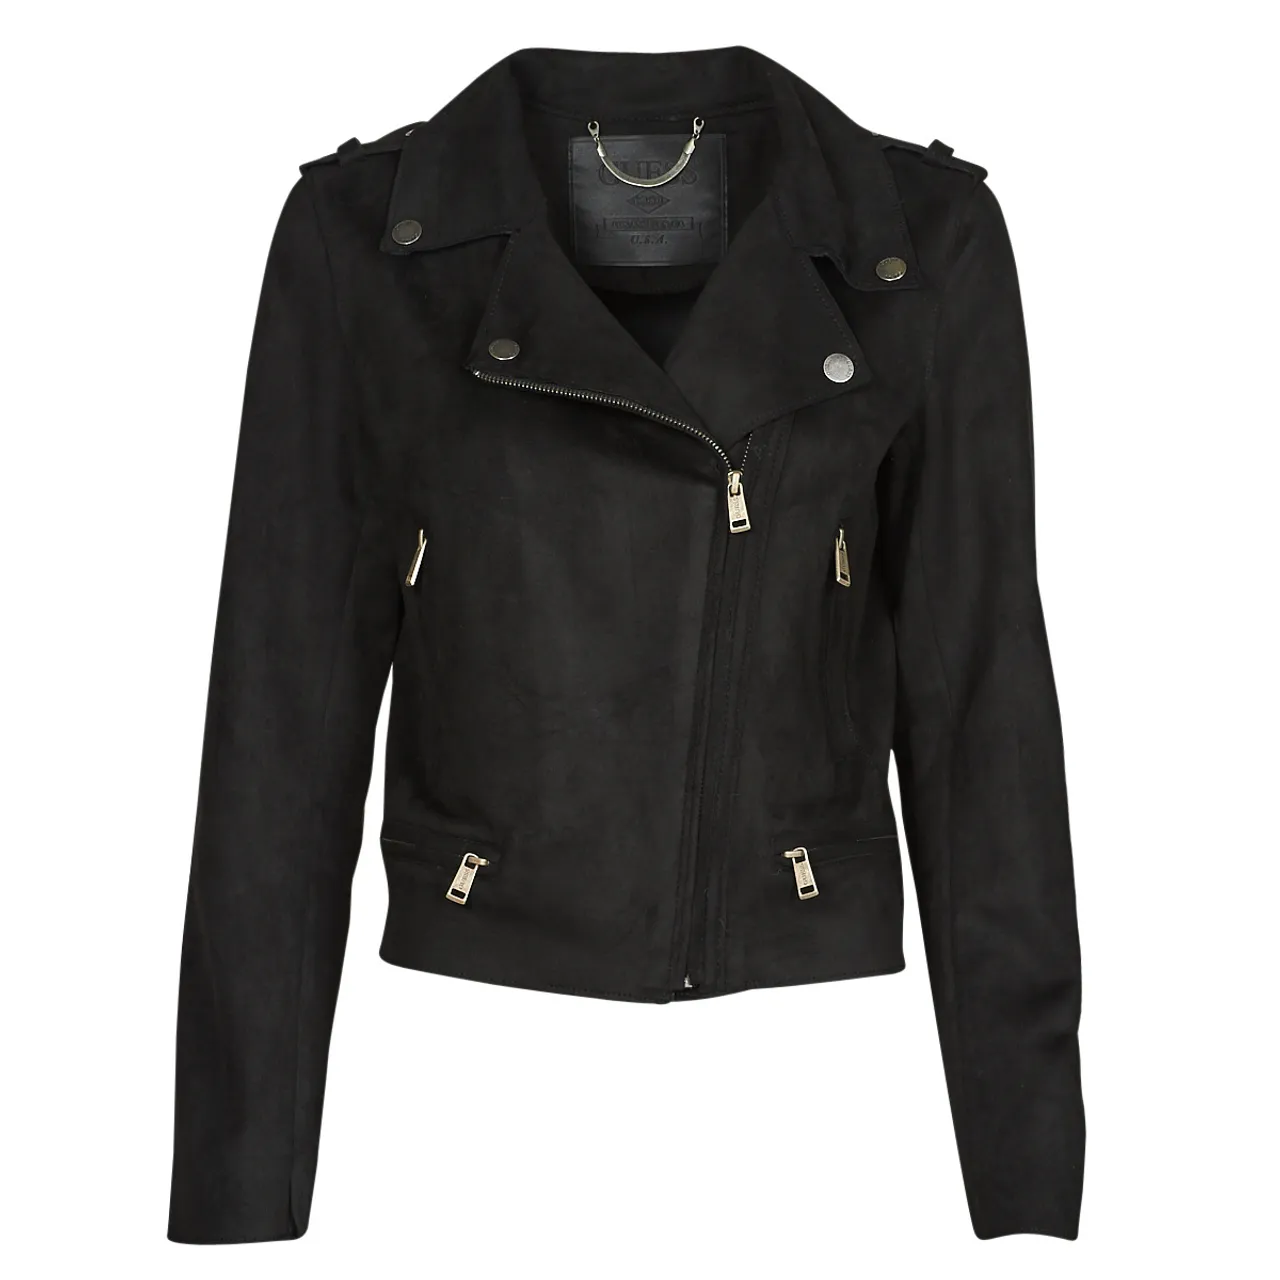 Guess  MONICA JACKET  women's Leather jacket in Black